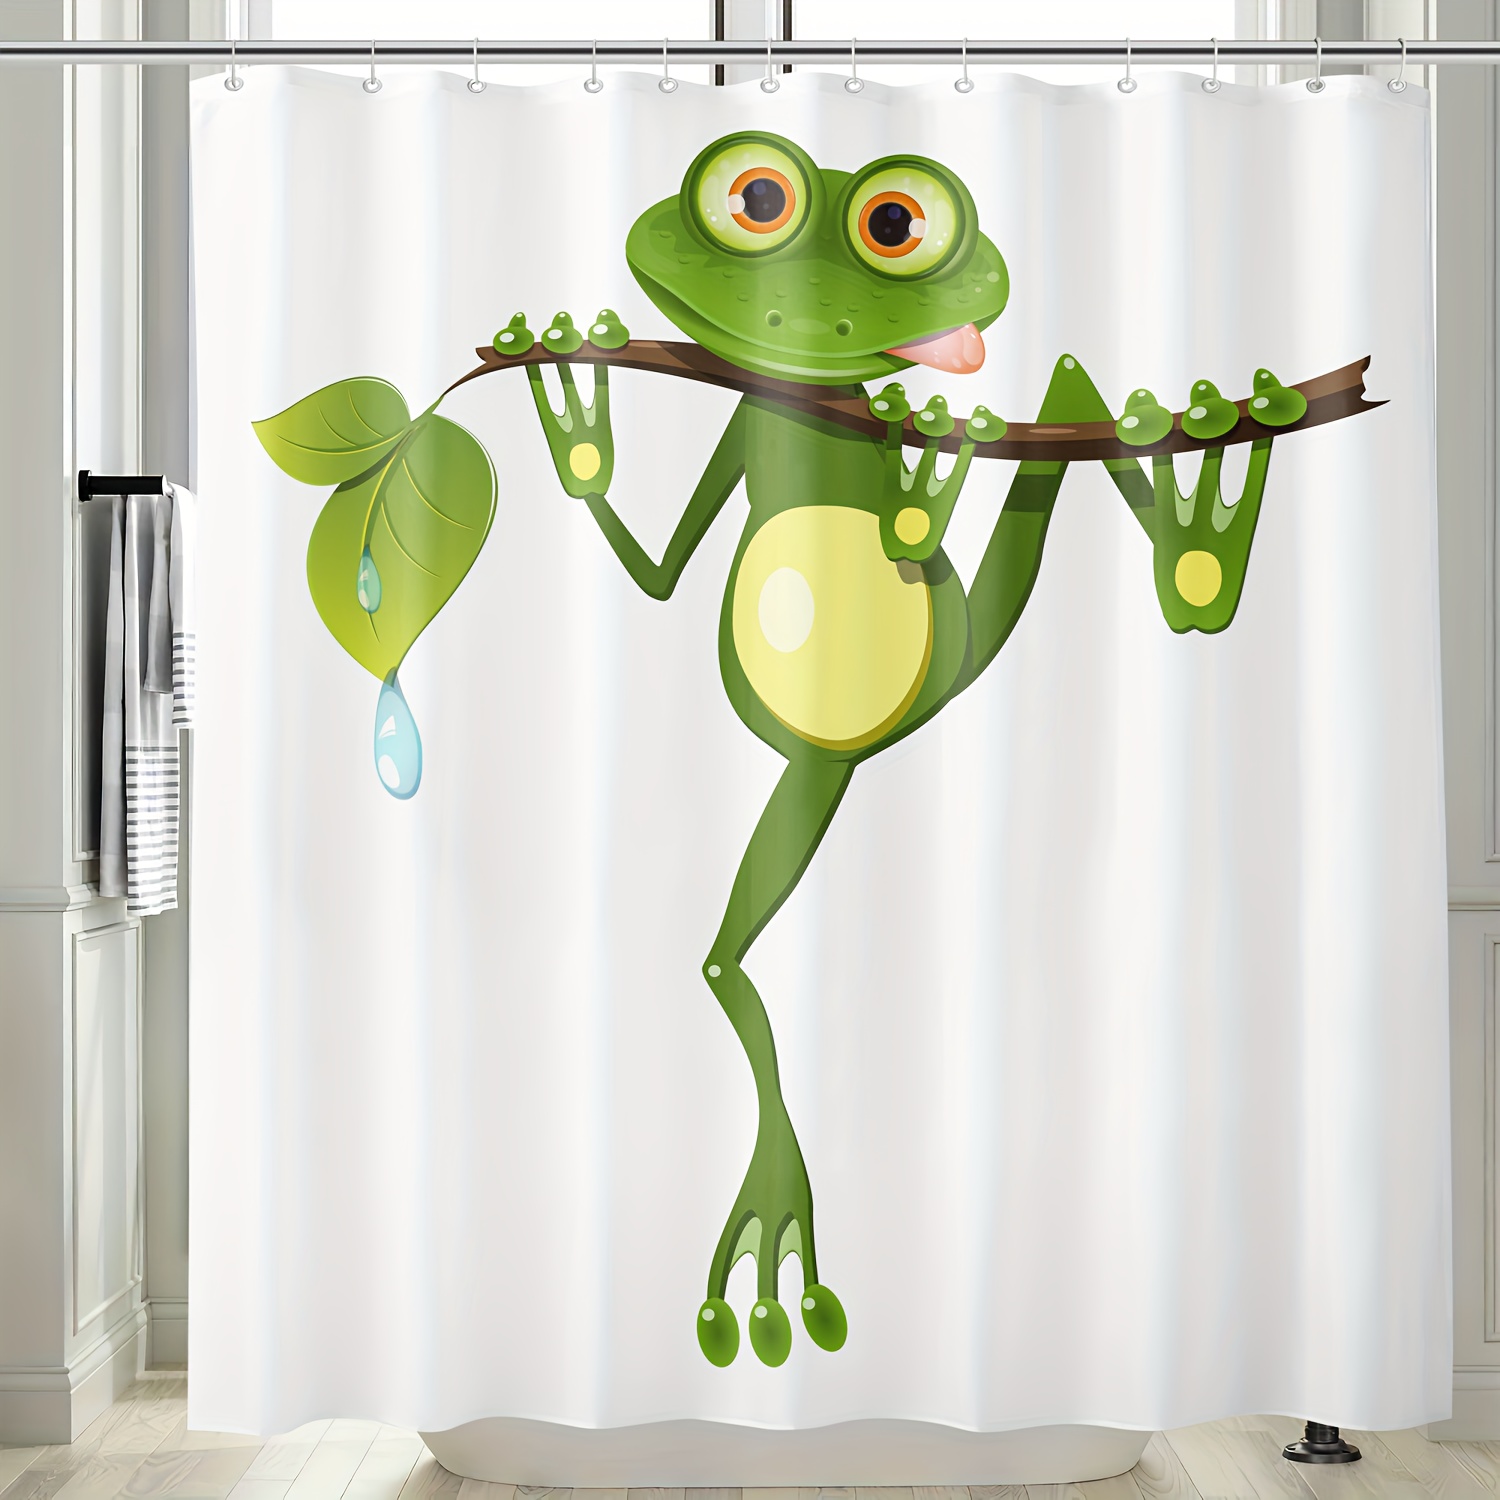 Waterproof Frog Pattern Shower Curtain 12 Hooks Mildew proof